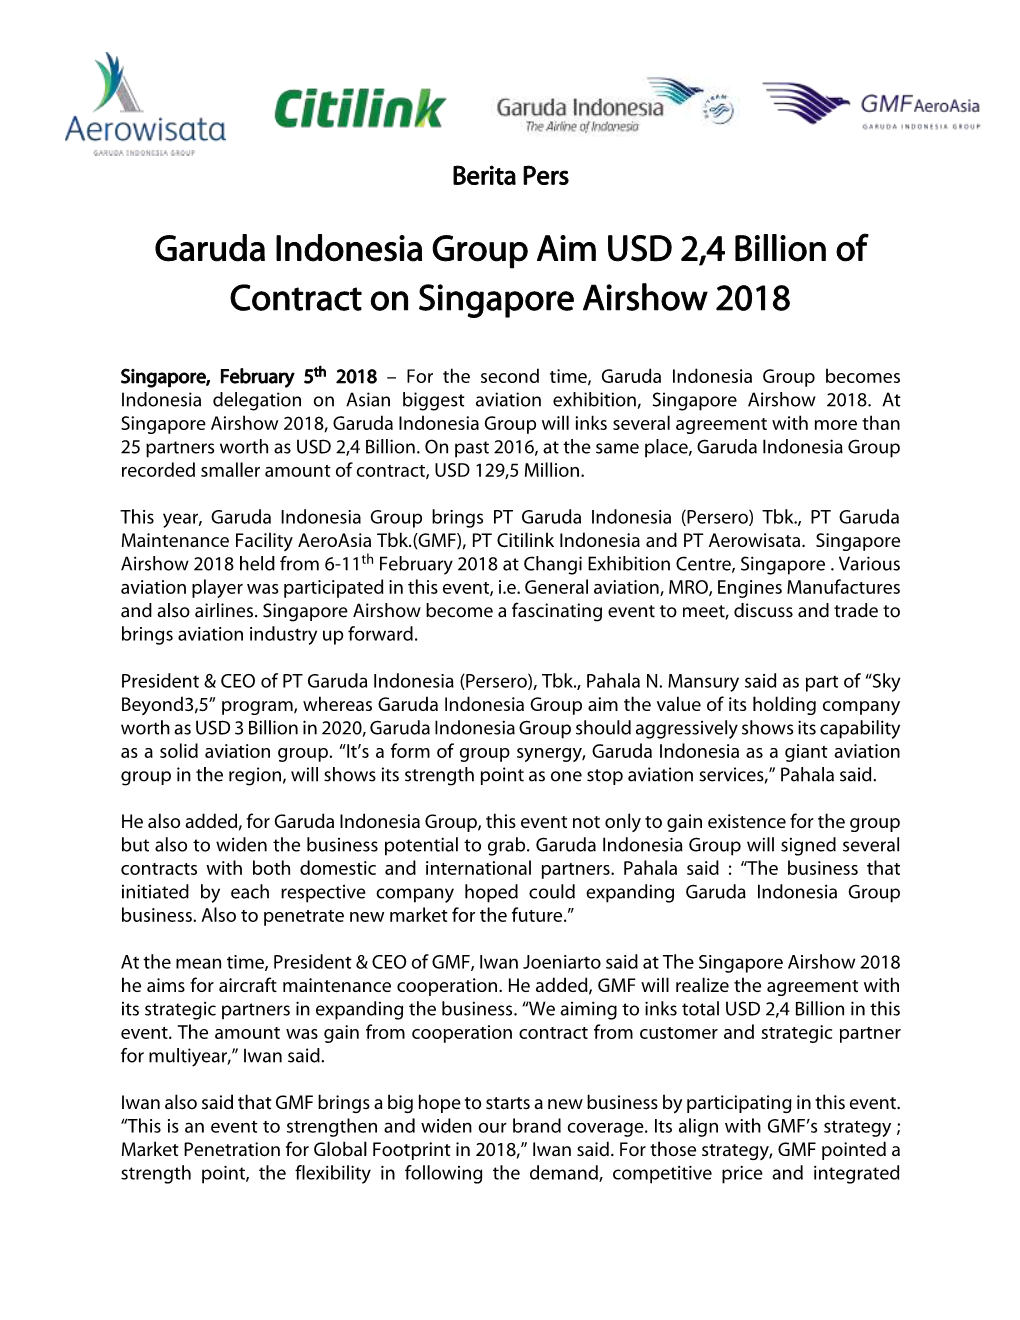 Garuda Indonesia Group Aim USD 2,4 Billion of Contract on Singapore Airshow 2018